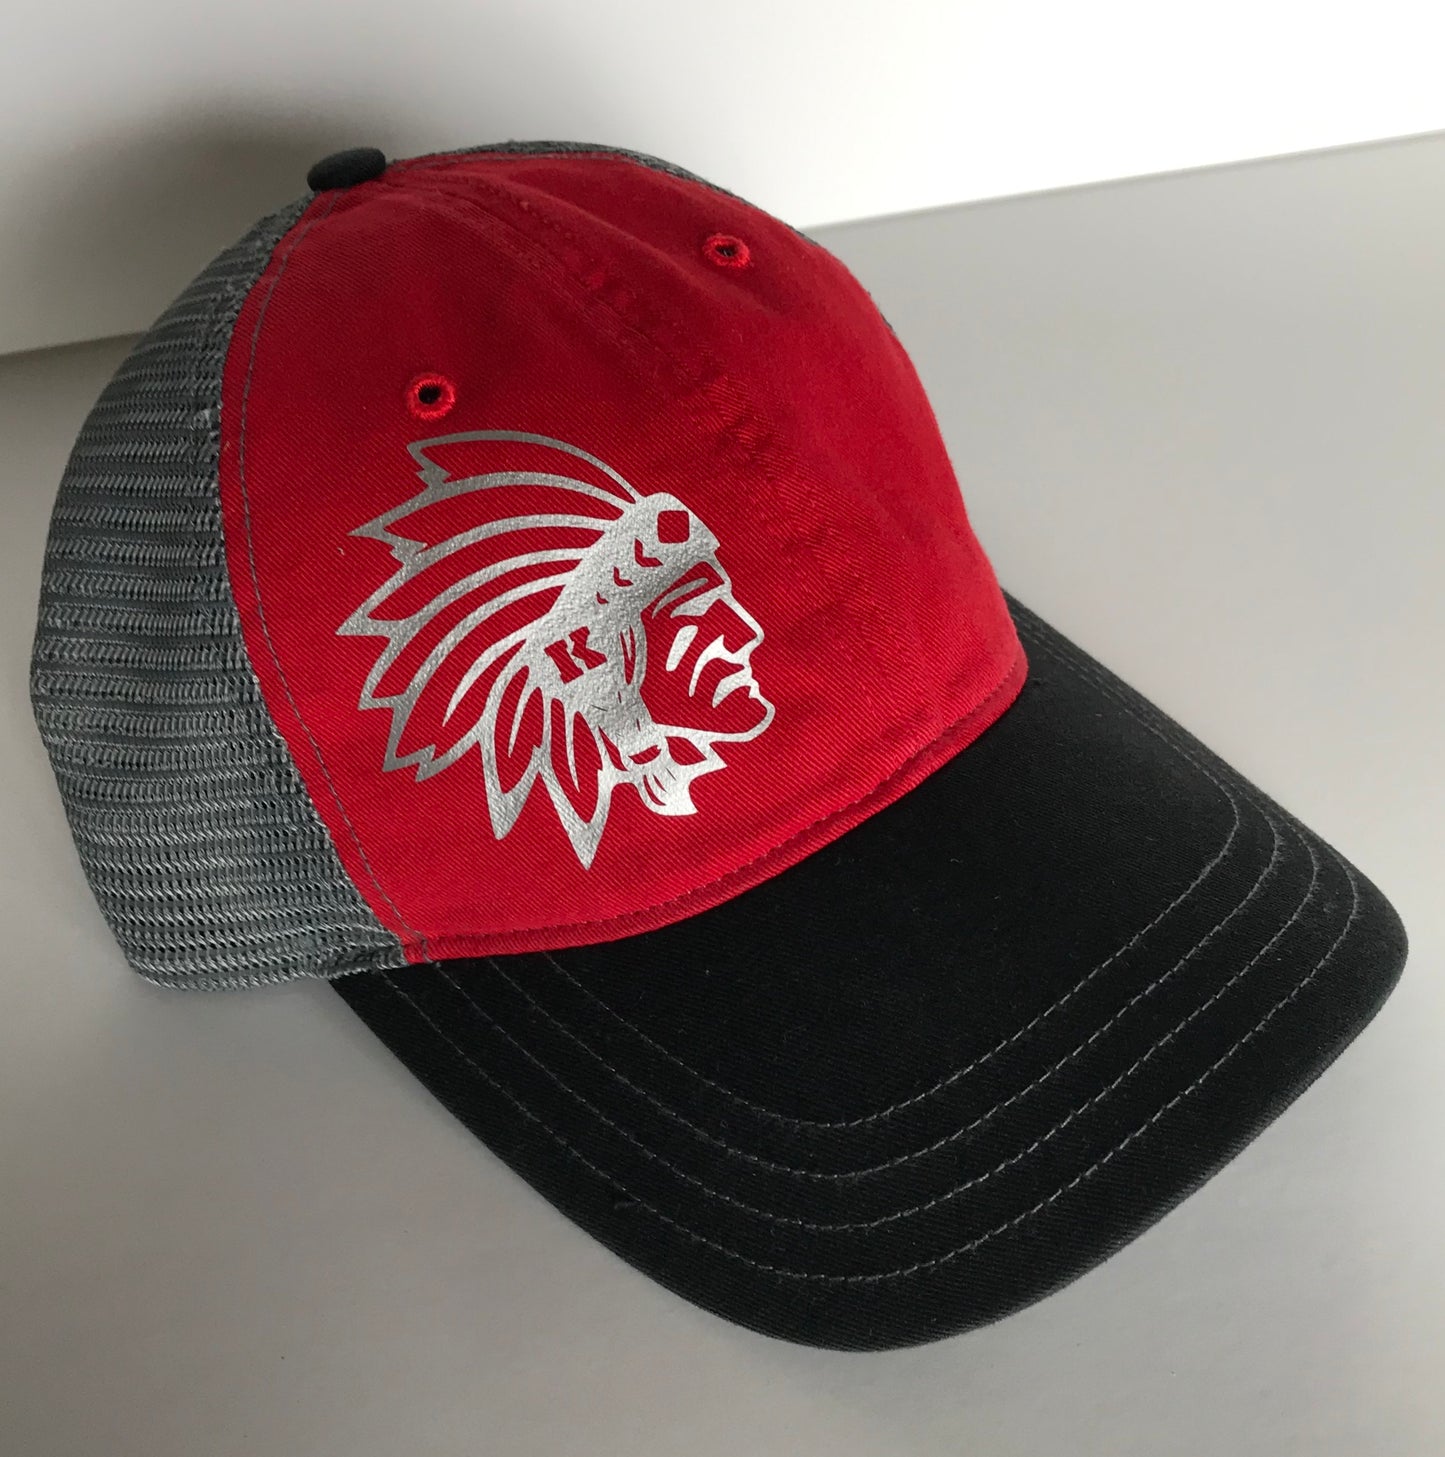 Low Profile Knox Redskins Hat - Adjustable - Red/Charcoal/Black/Silver